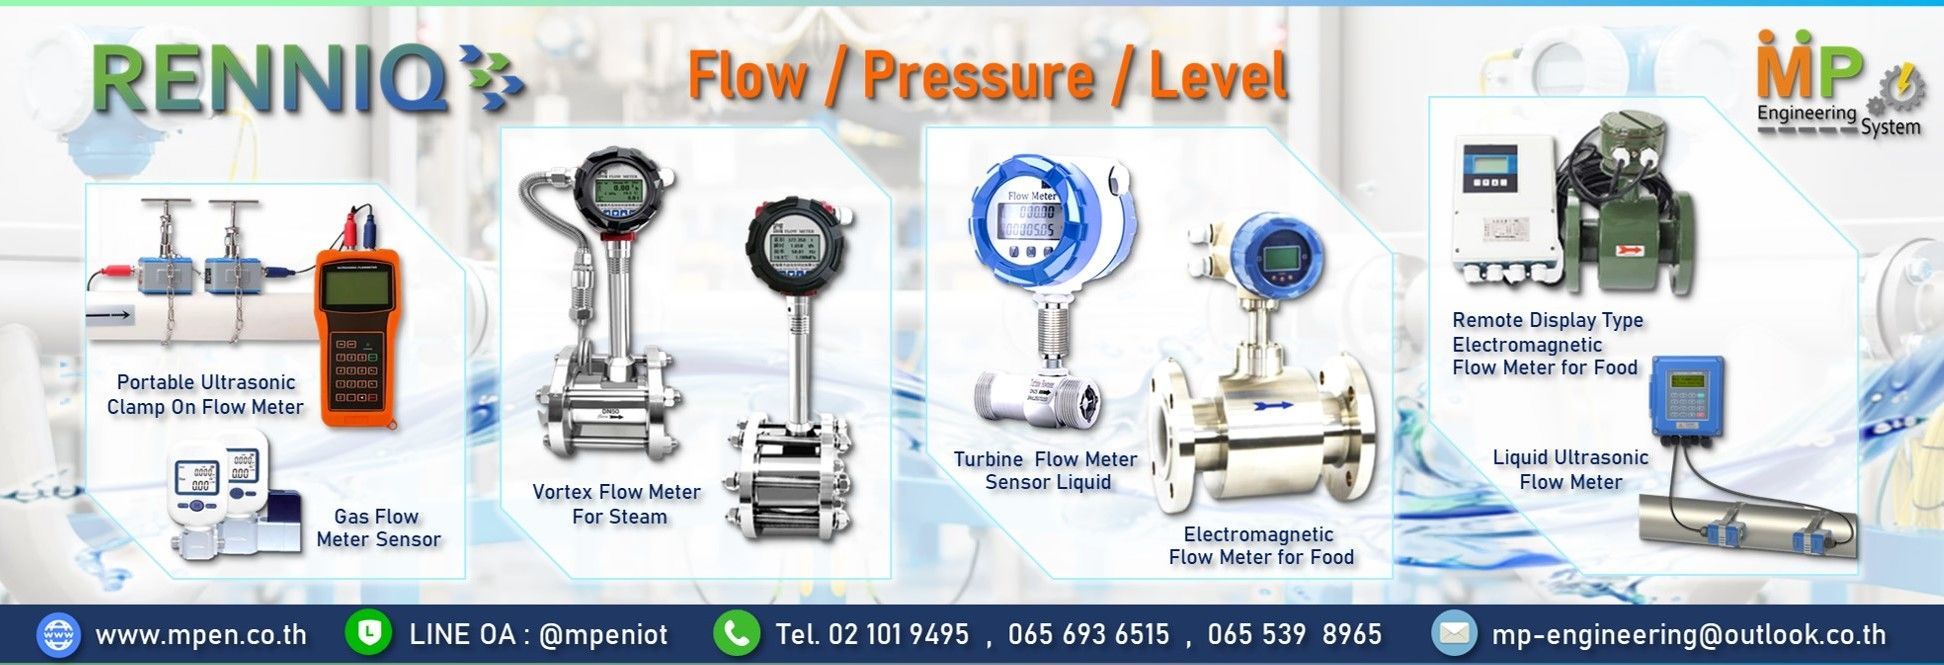 Renniq Instrument Product (Flow Pressure Level)